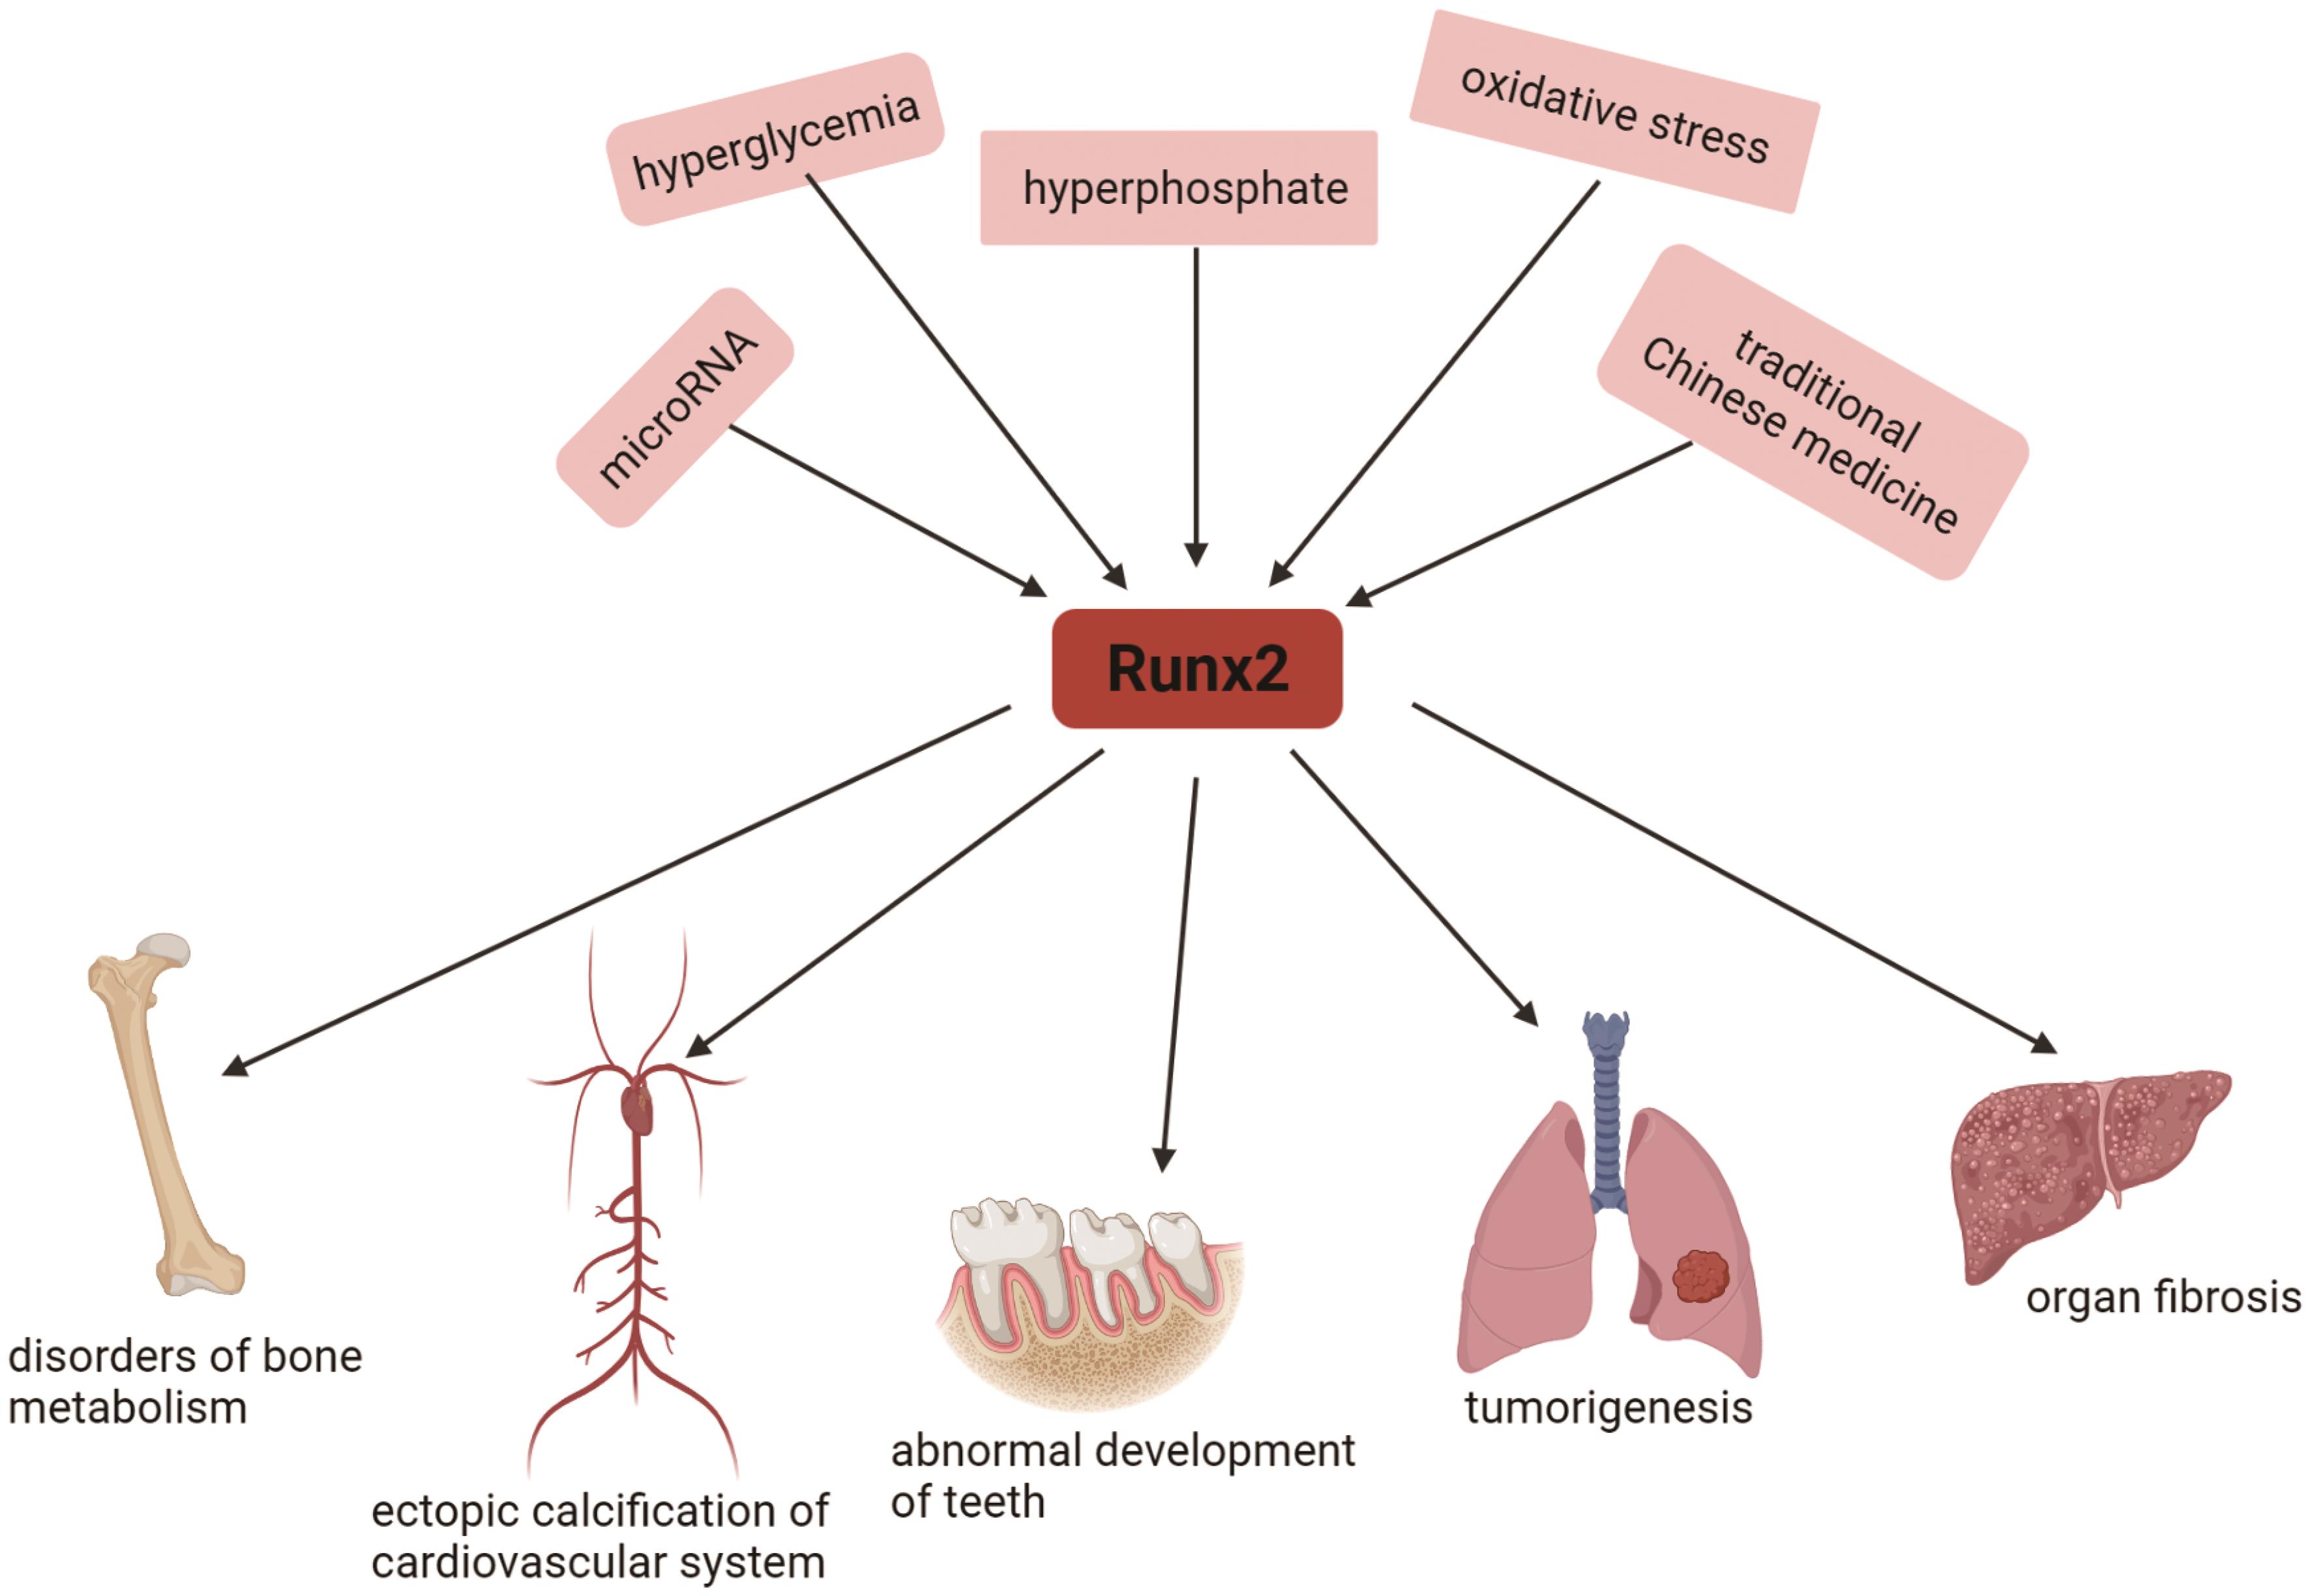 Pathogenic potential of Runx2